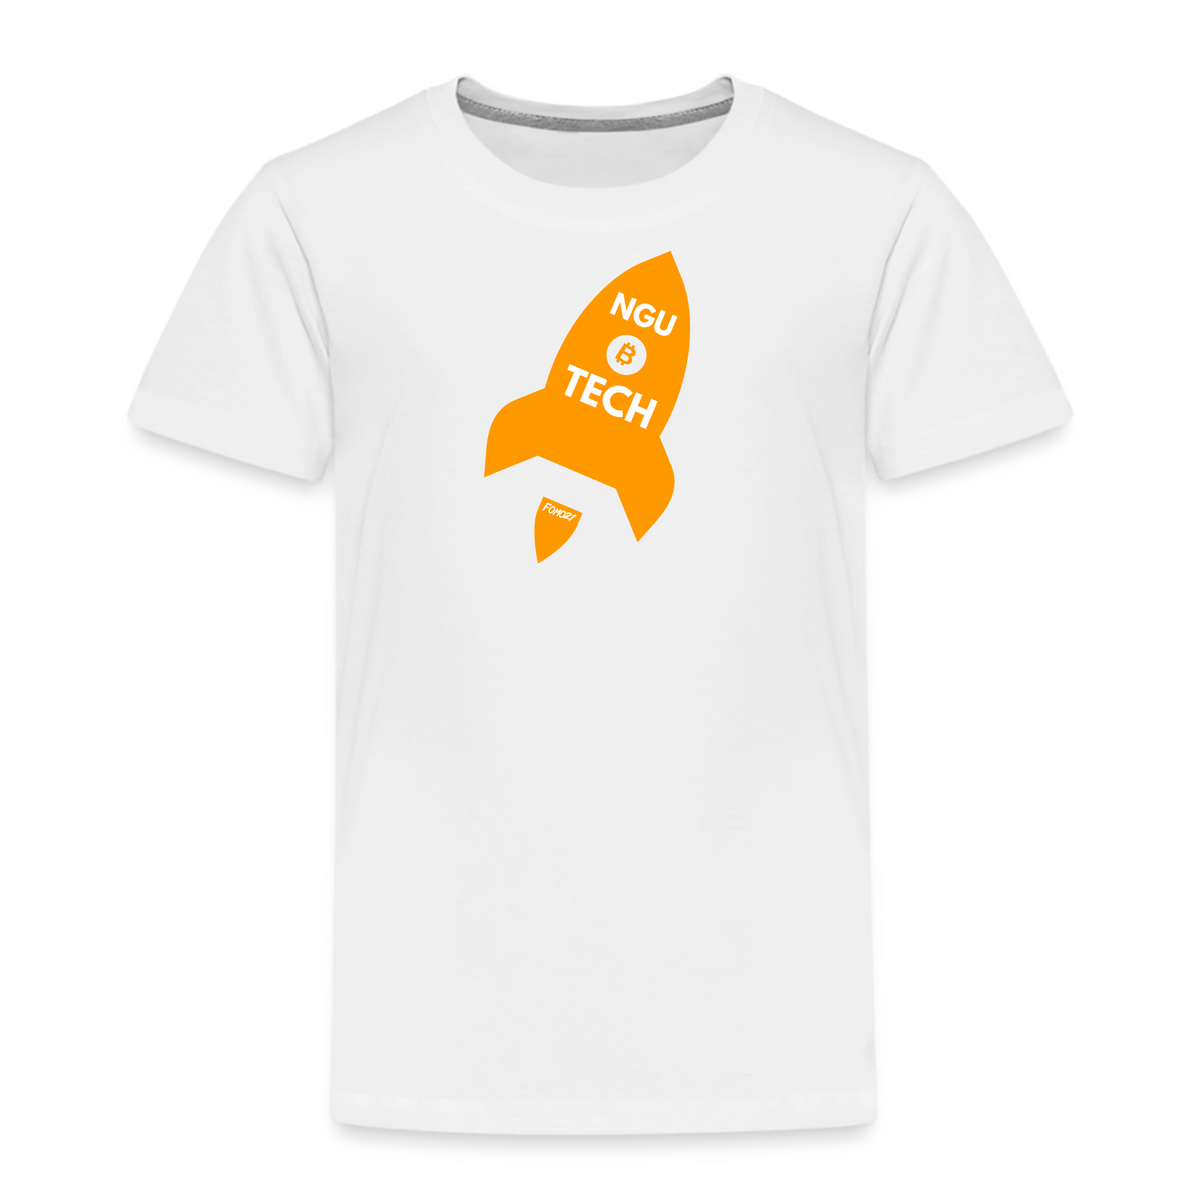 NGU Tech Bitcoin Toddler T-Shirt - fomo21